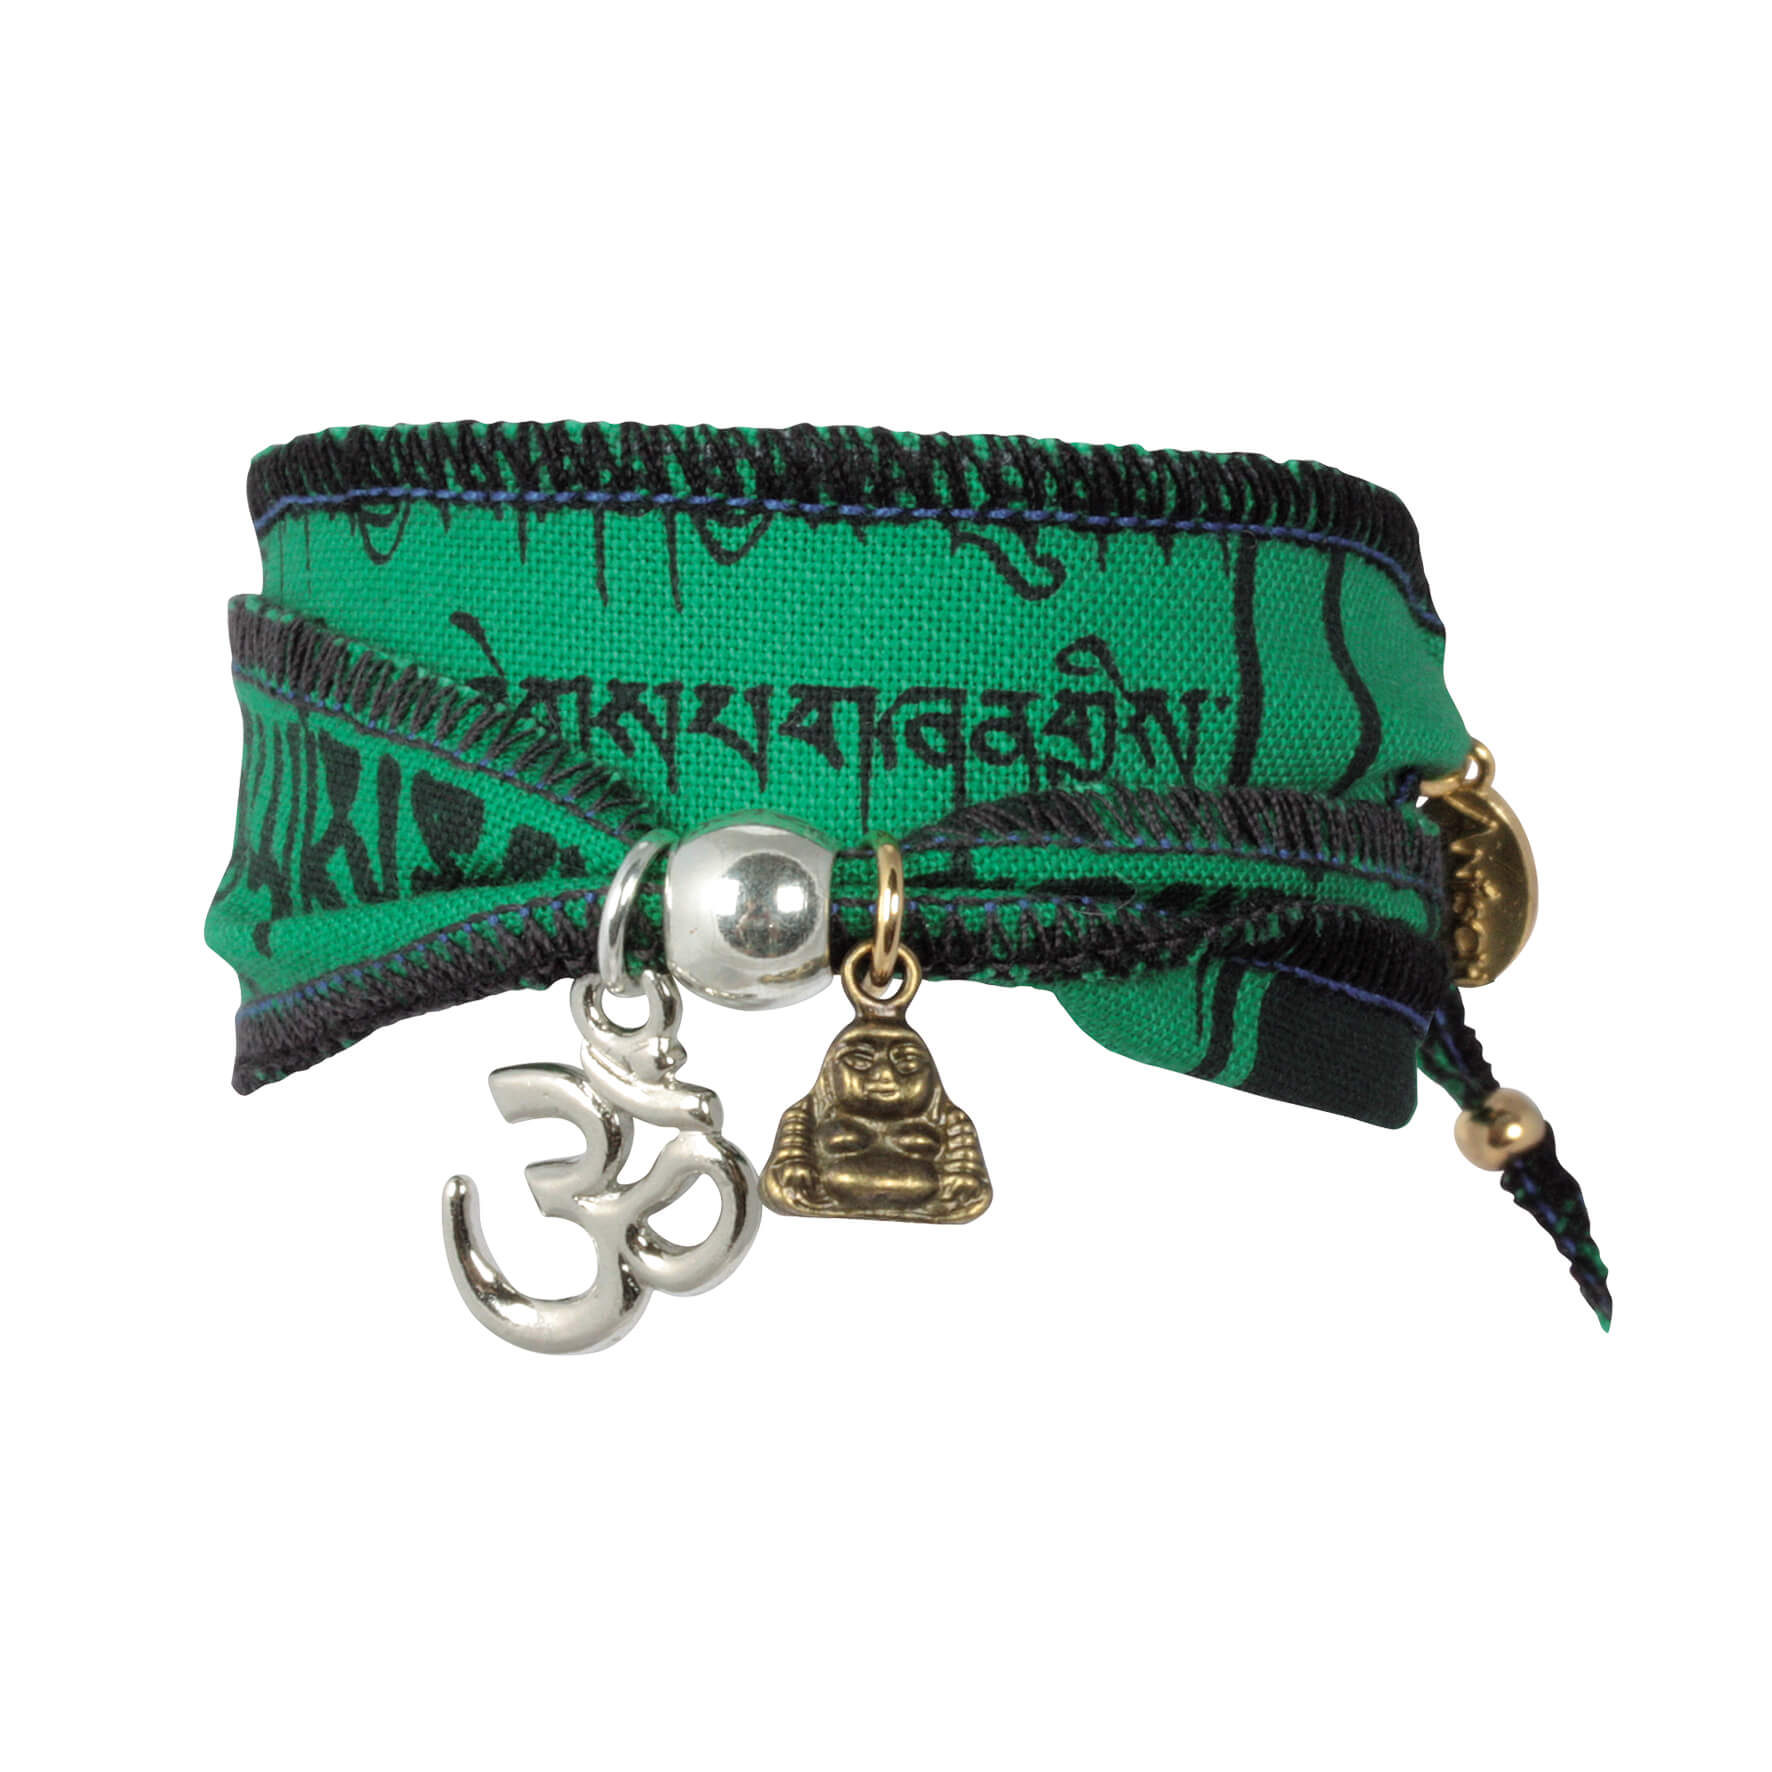 Water Om - Tibetan Wish bracelet made from Tibetan prayer flags